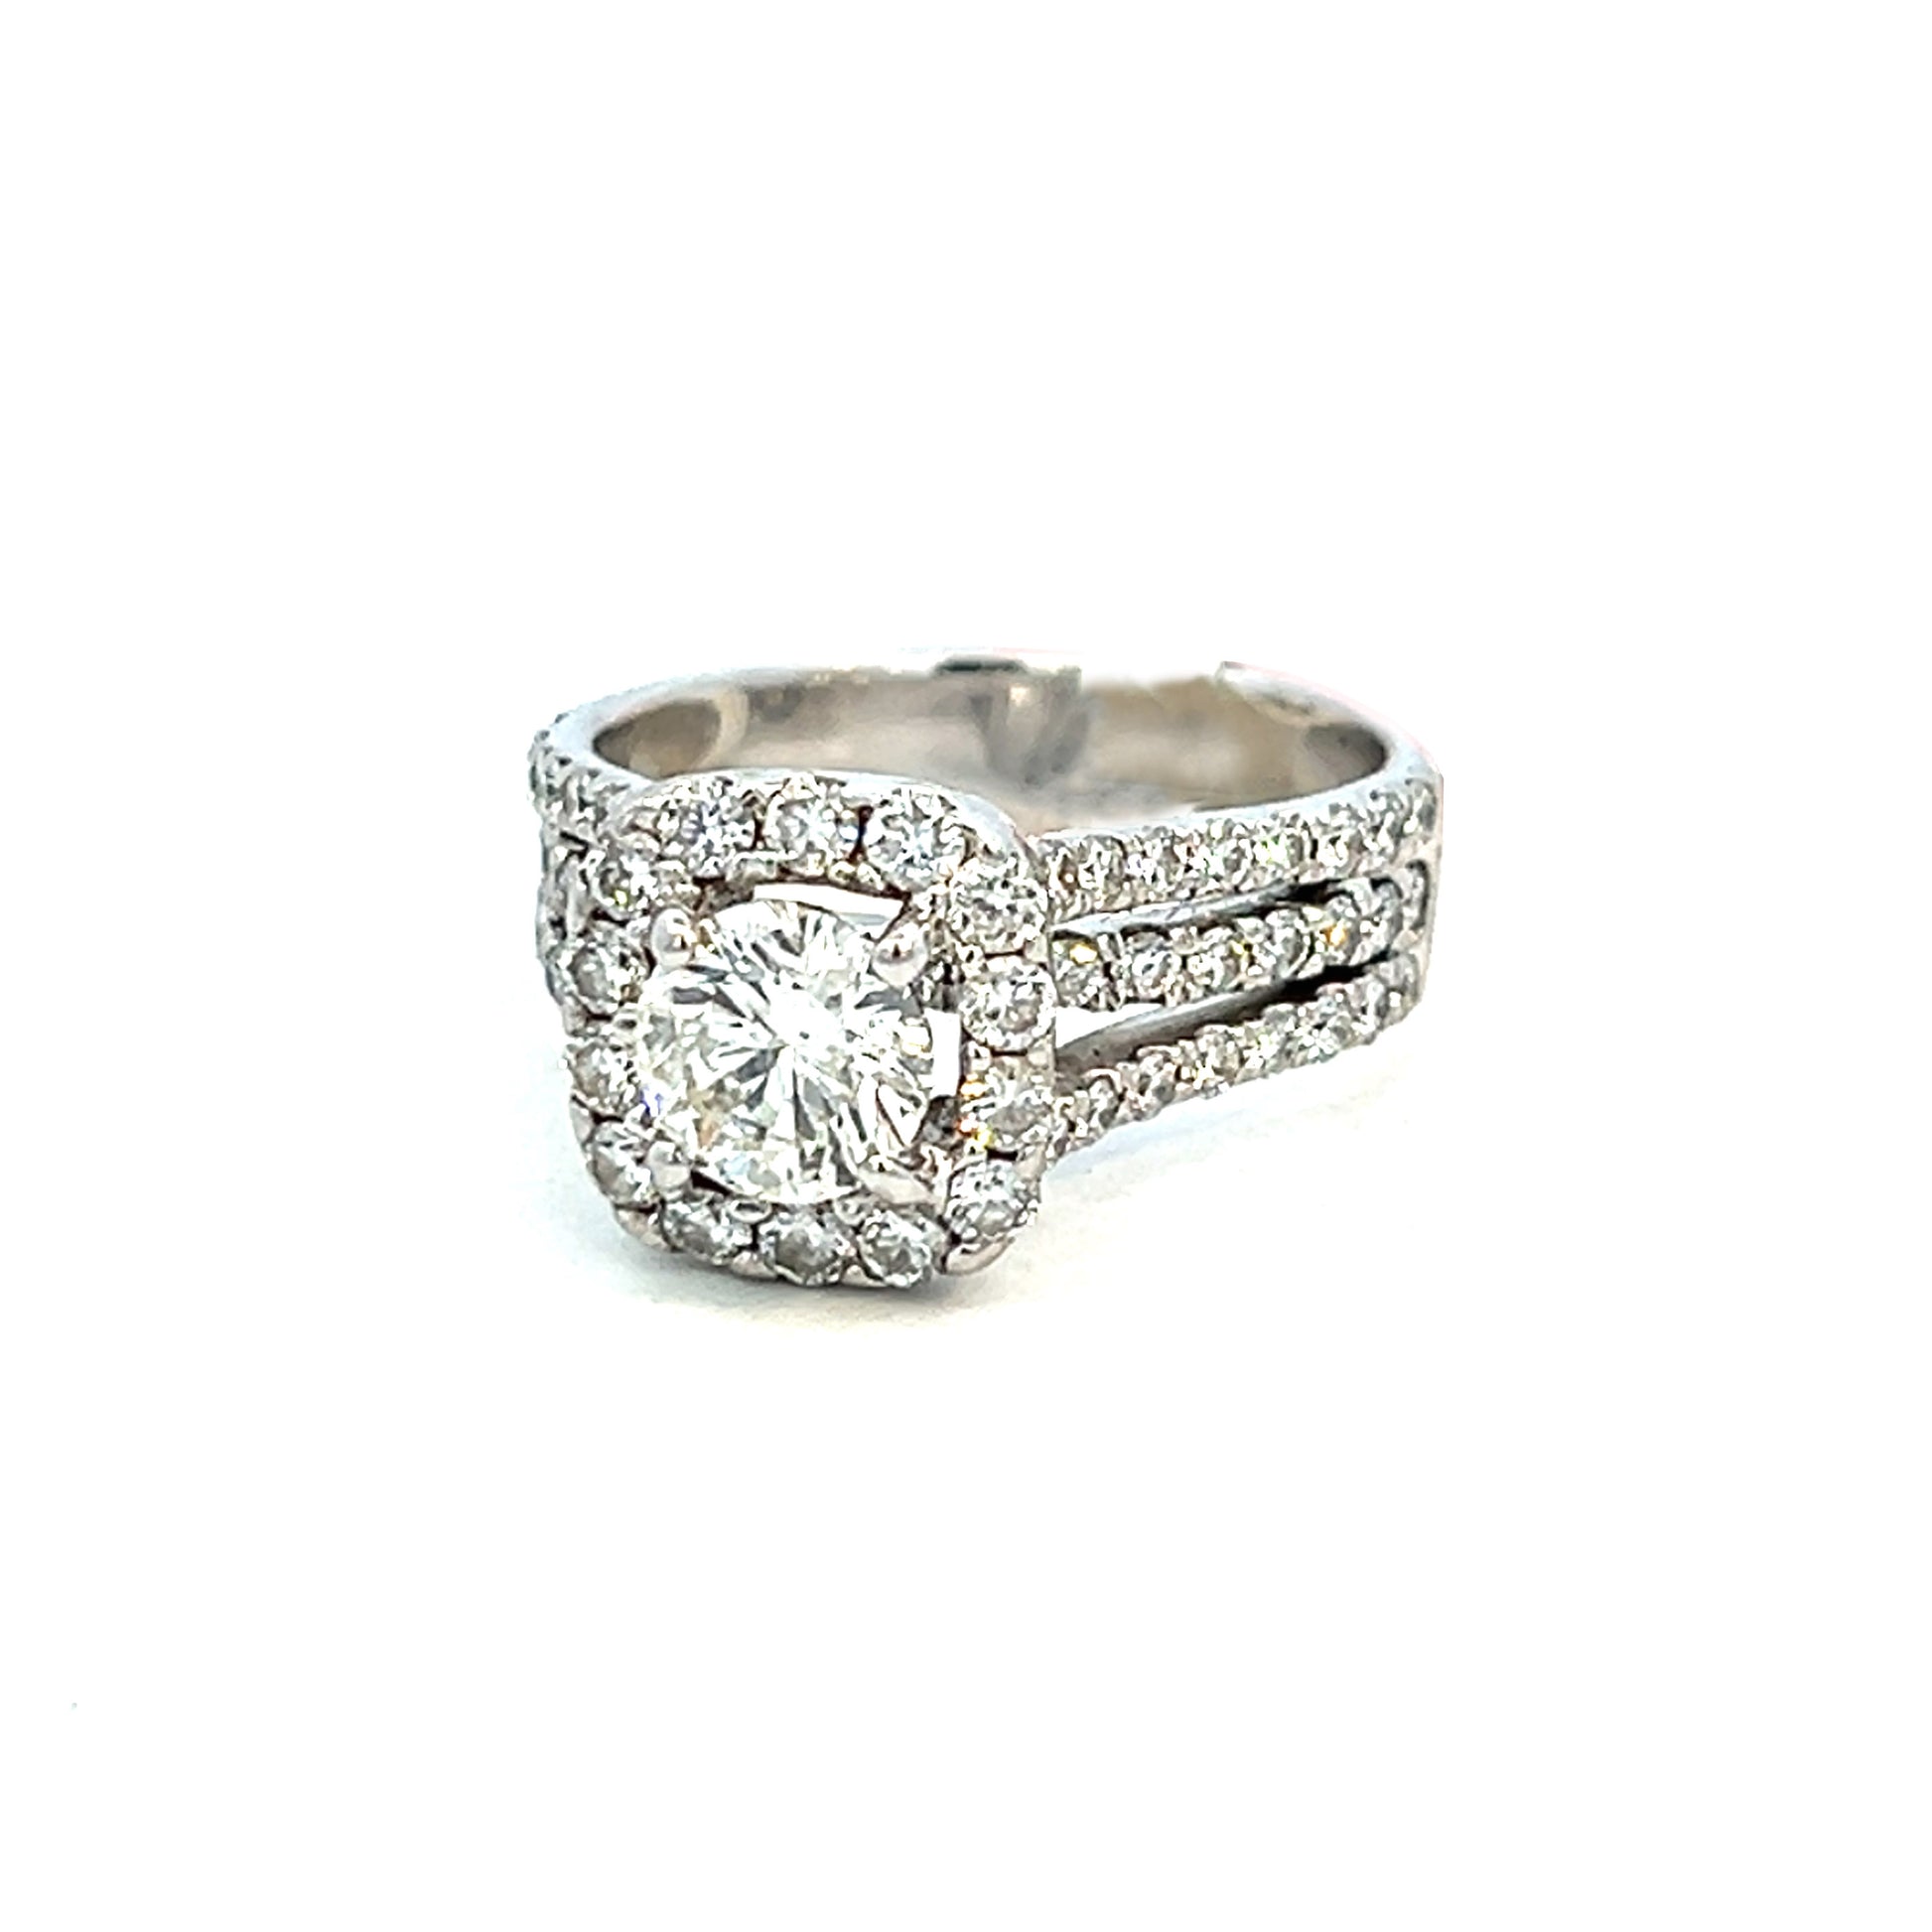 2 Carat Natural Diamond Engagement Ring | Halo Diamond Ring